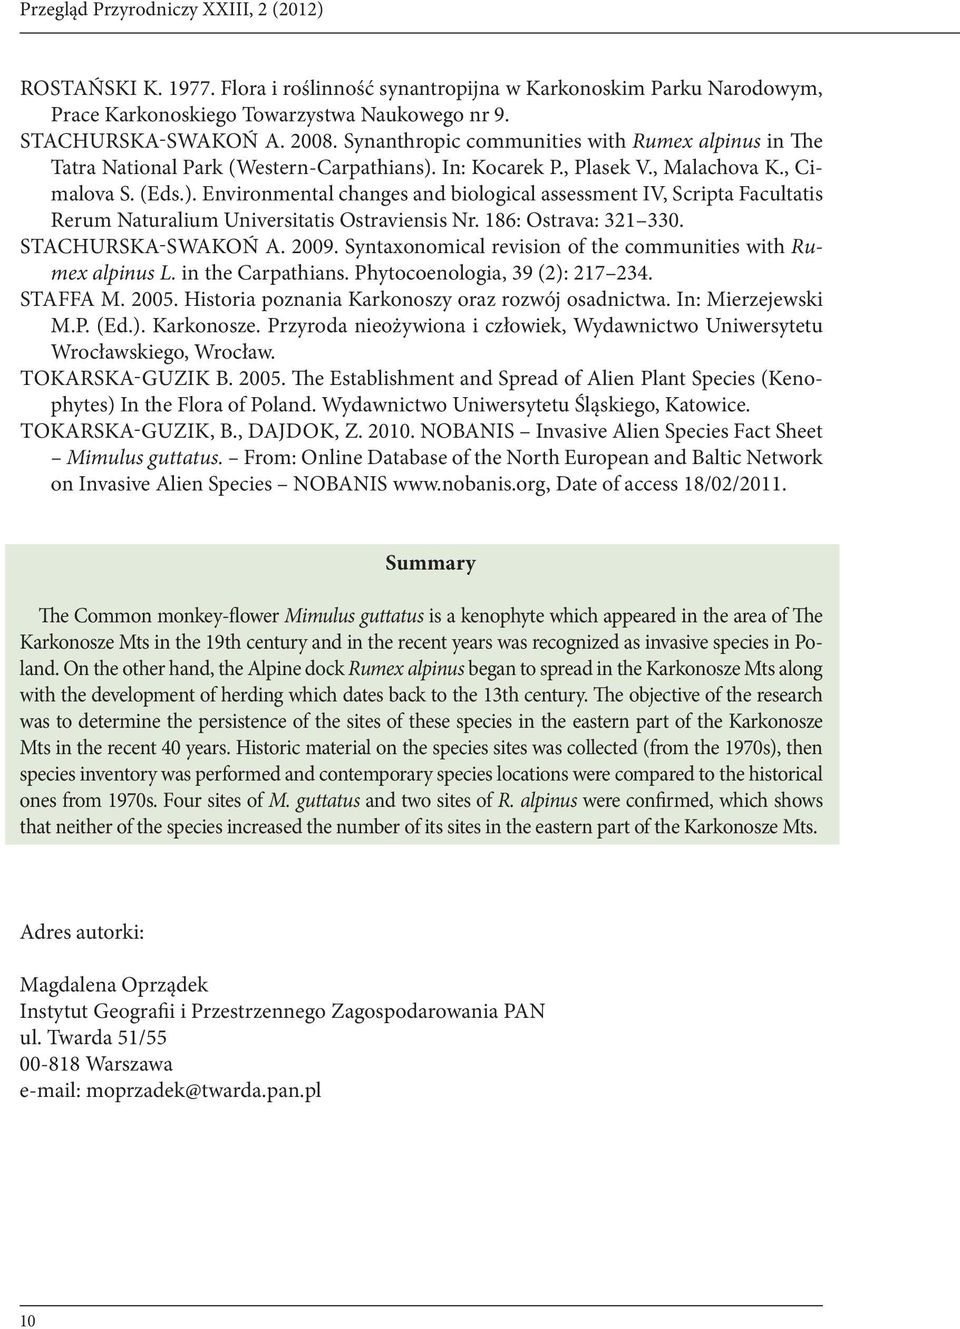 In: Kocarek P., Plasek V., Malachova K., Cimalova S. (Eds.). Environmental changes and biological assessment IV, Scripta Facultatis Rerum Naturalium Universitatis Ostraviensis Nr.